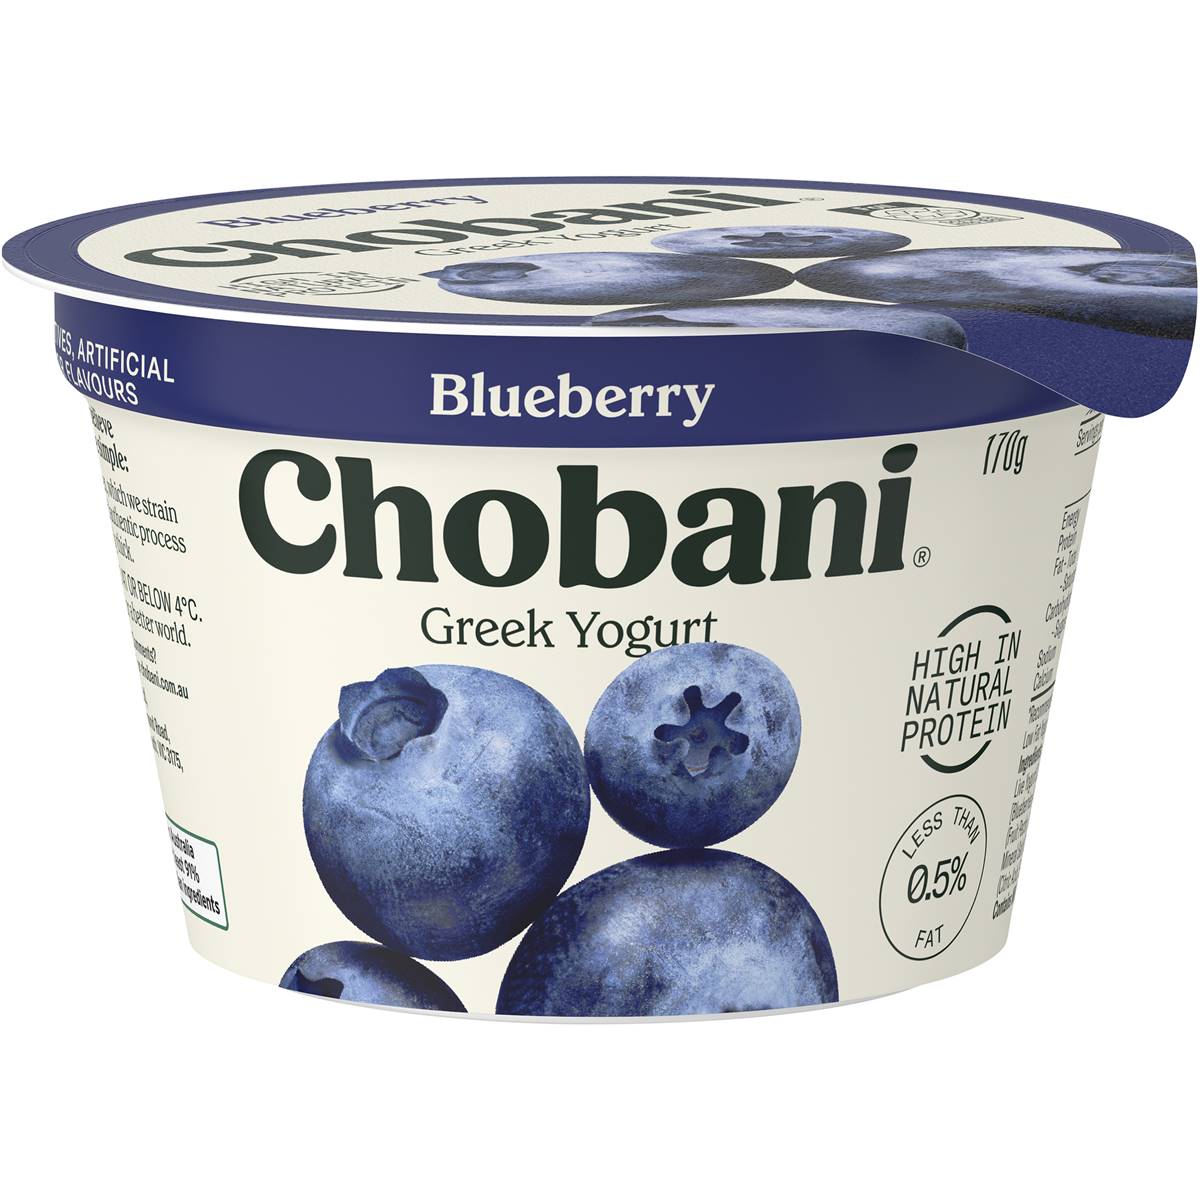 Chobani No Fat Blueberry Yoghurt